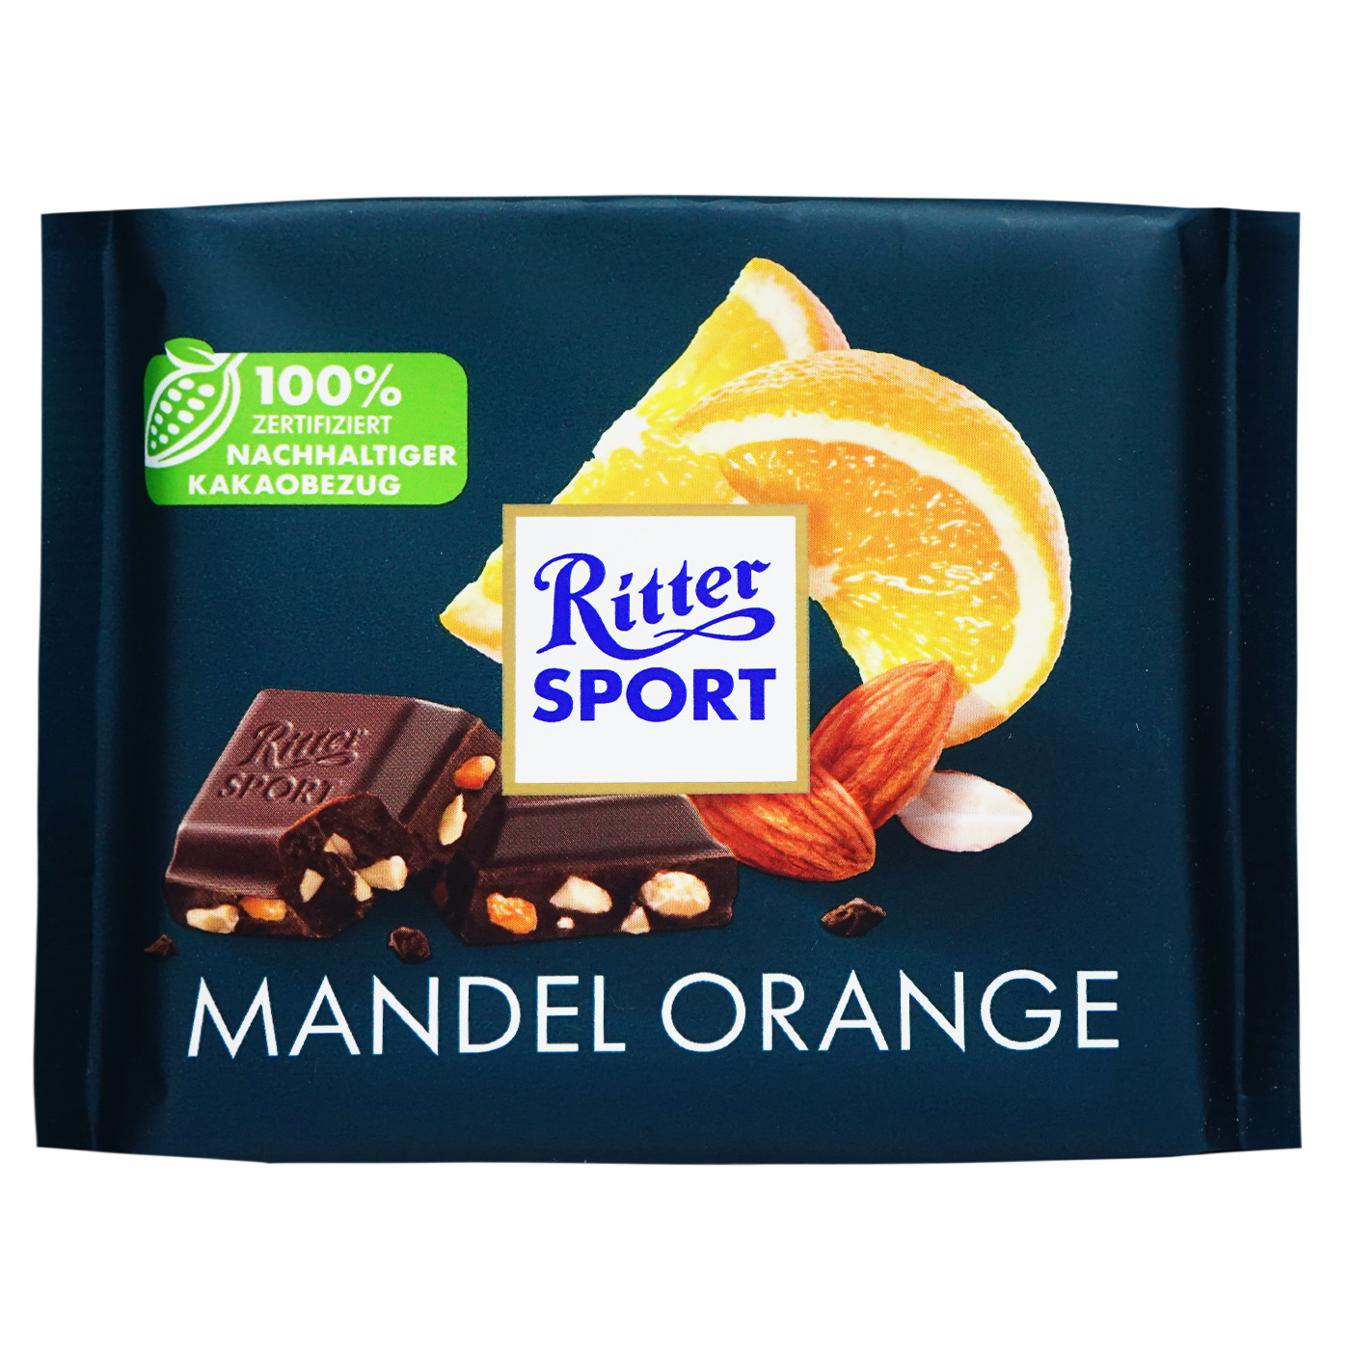 Chocolate Ritter Sport almond orange 100g